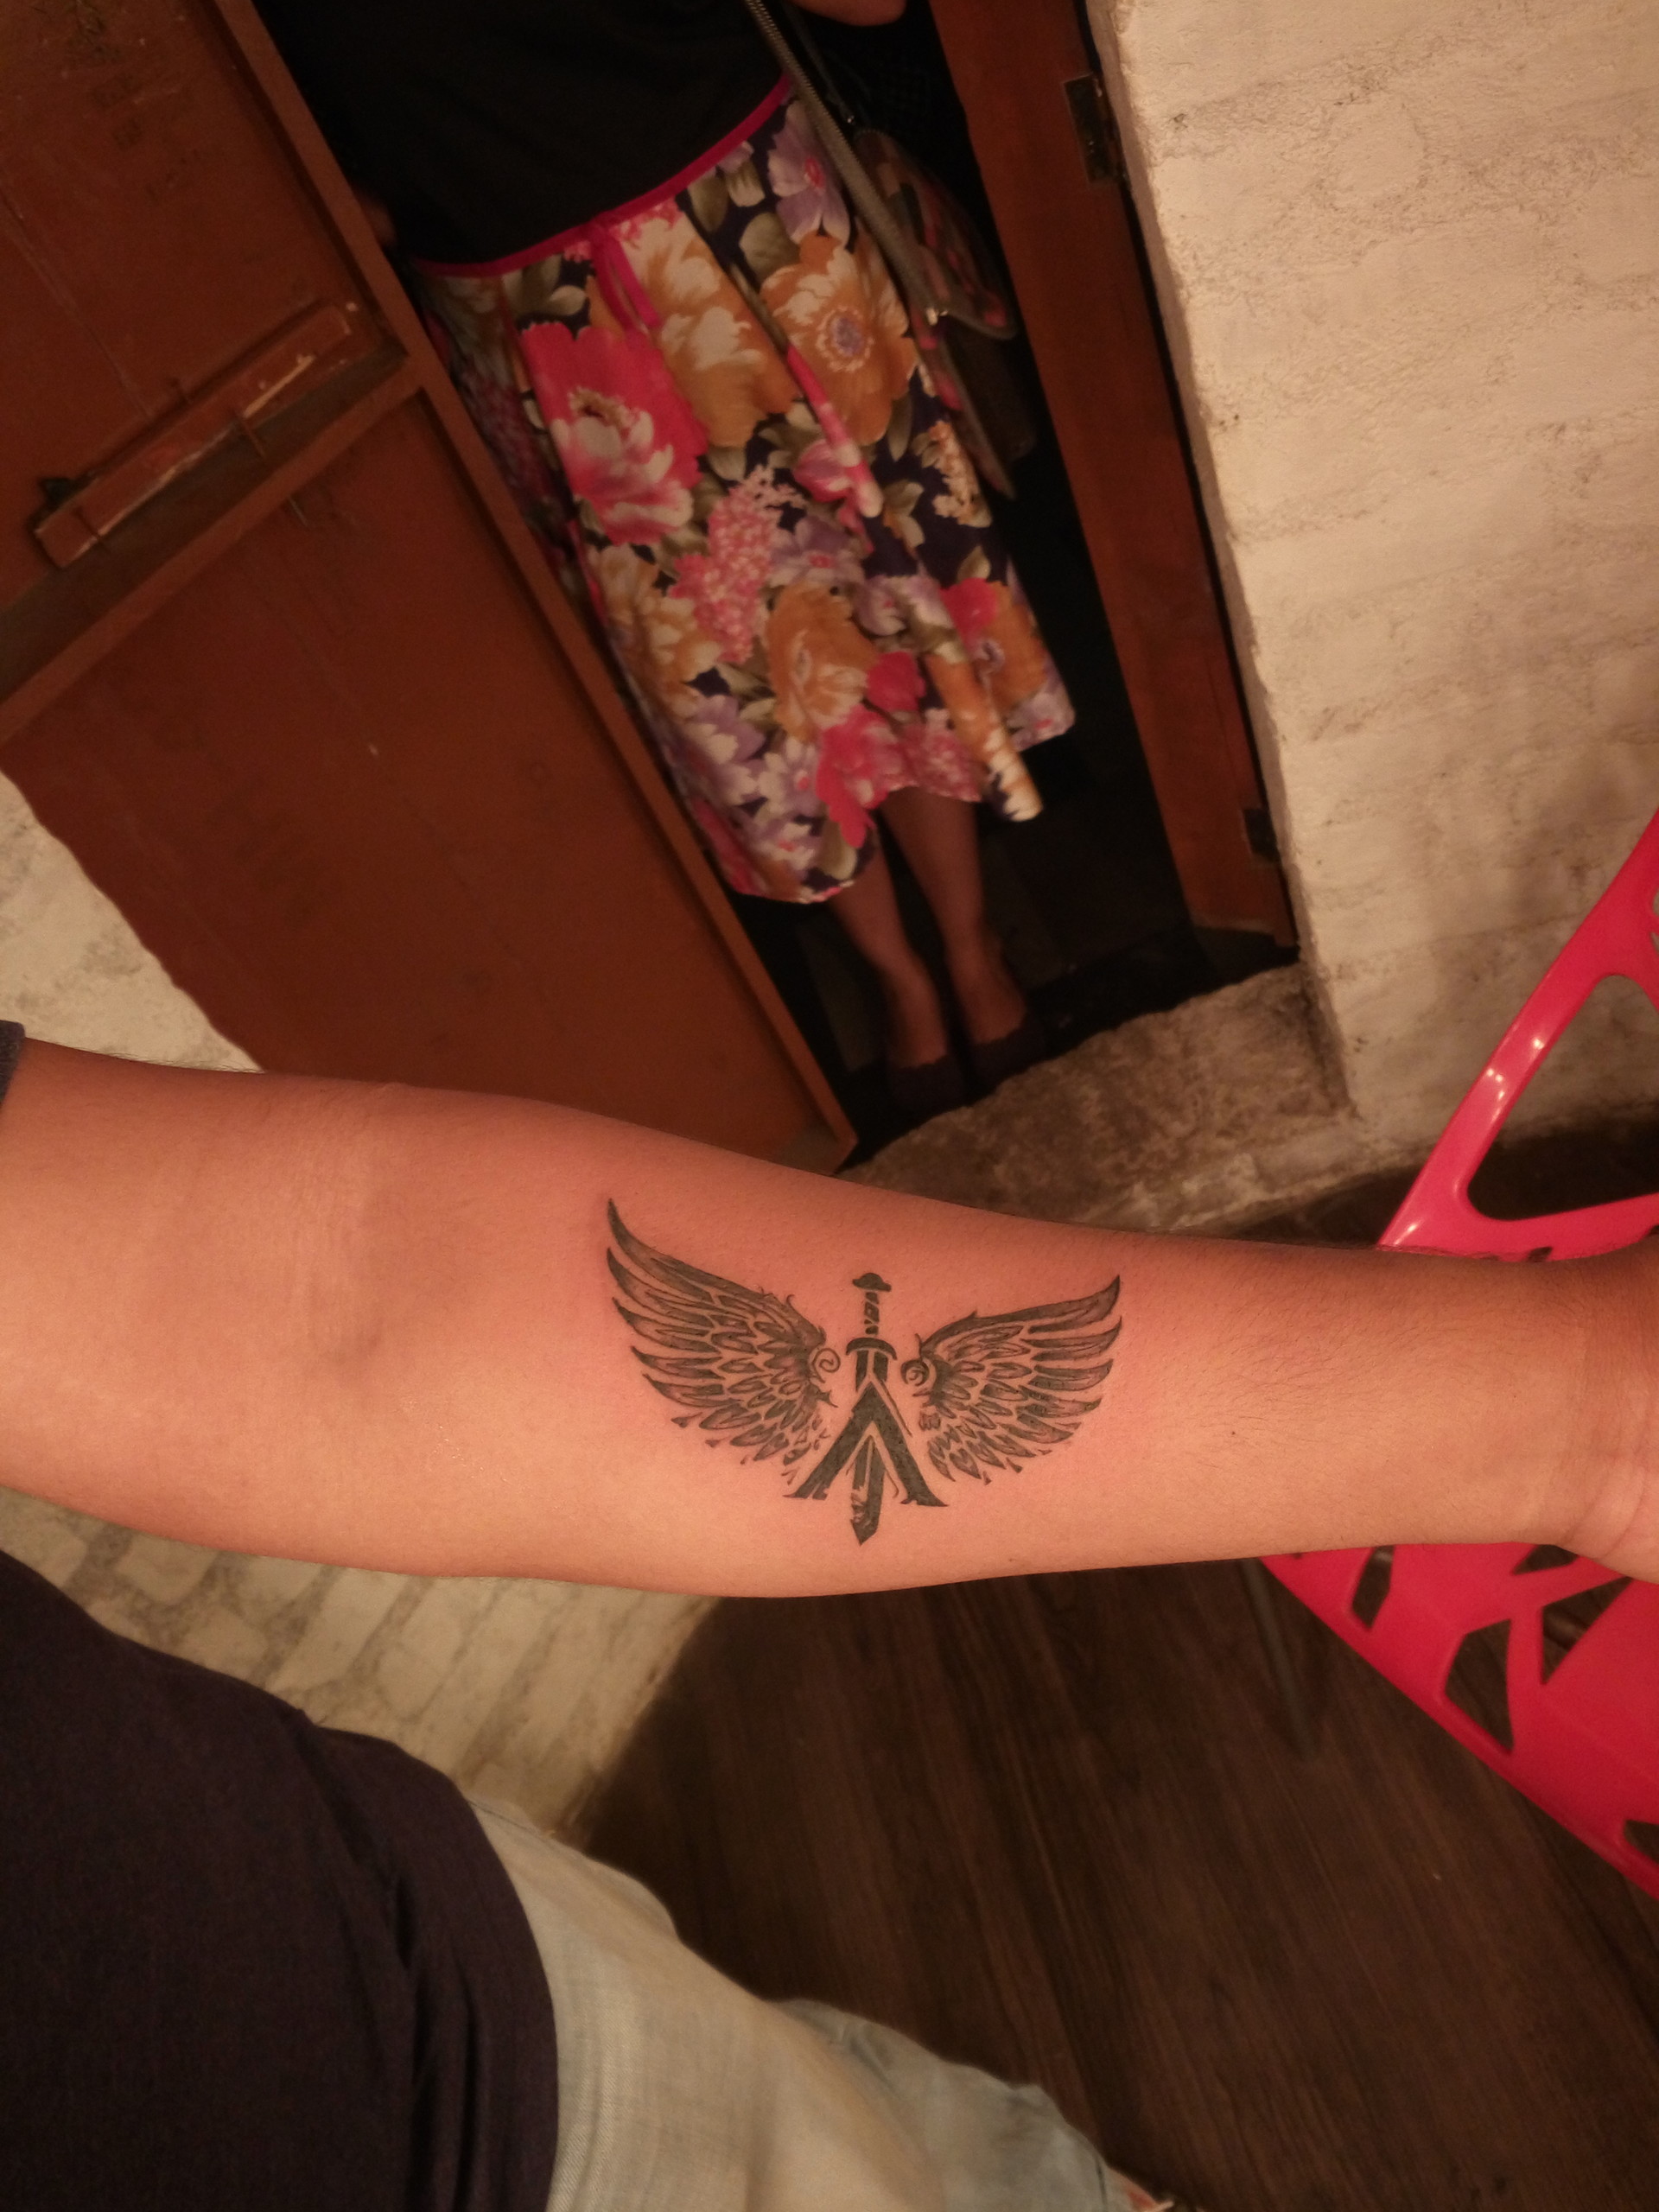 Heavens Tattoo Studio Bangalore on LinkedIn: #bangalore #love #devil #angel  #good #bad #wings #tattoos #ink #fashion…